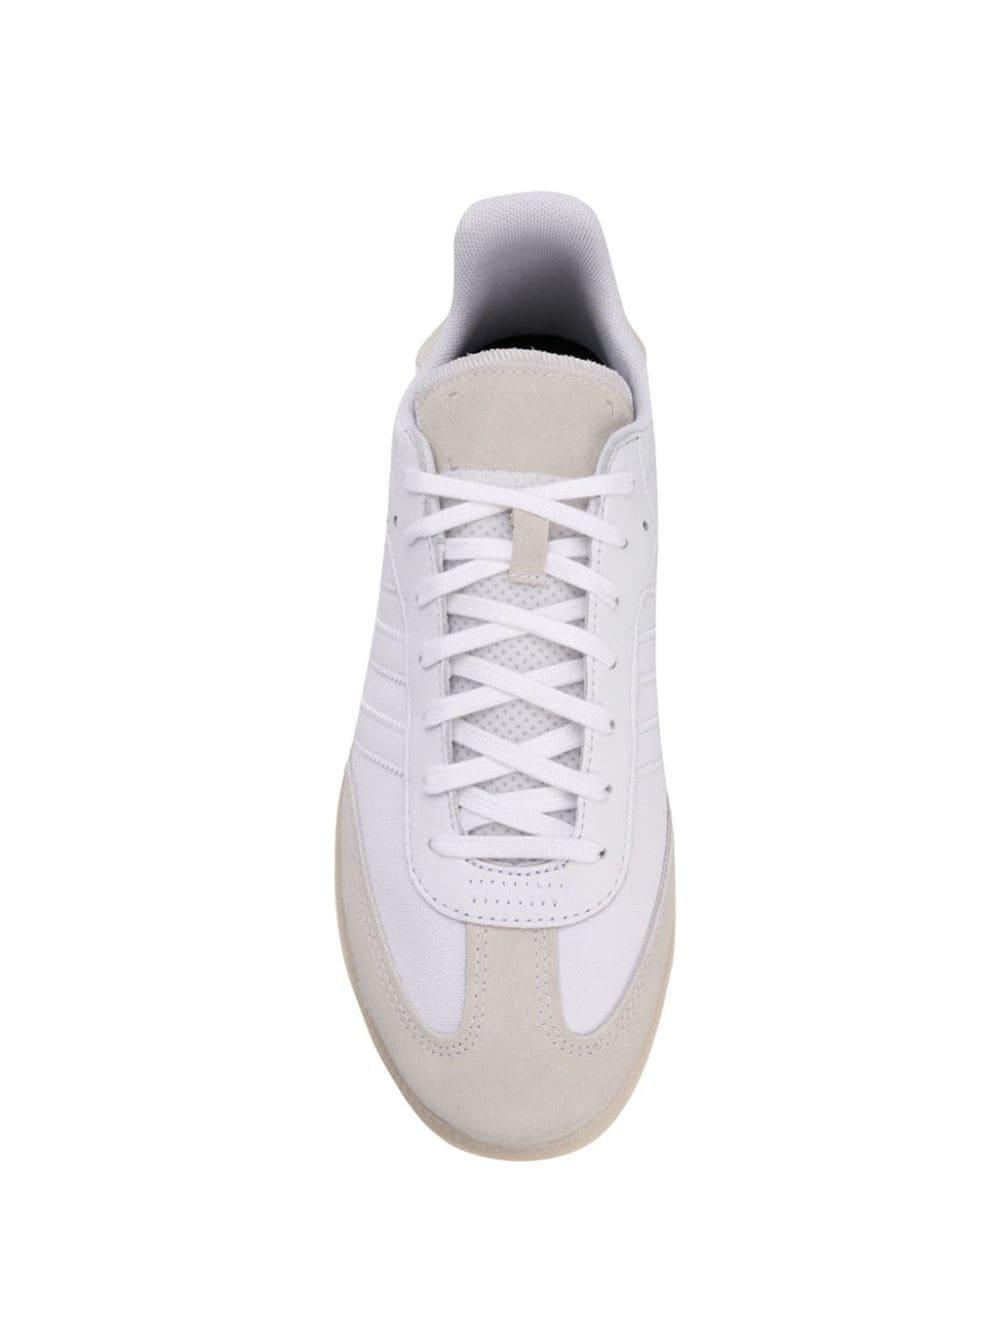 adidas s4m3a white